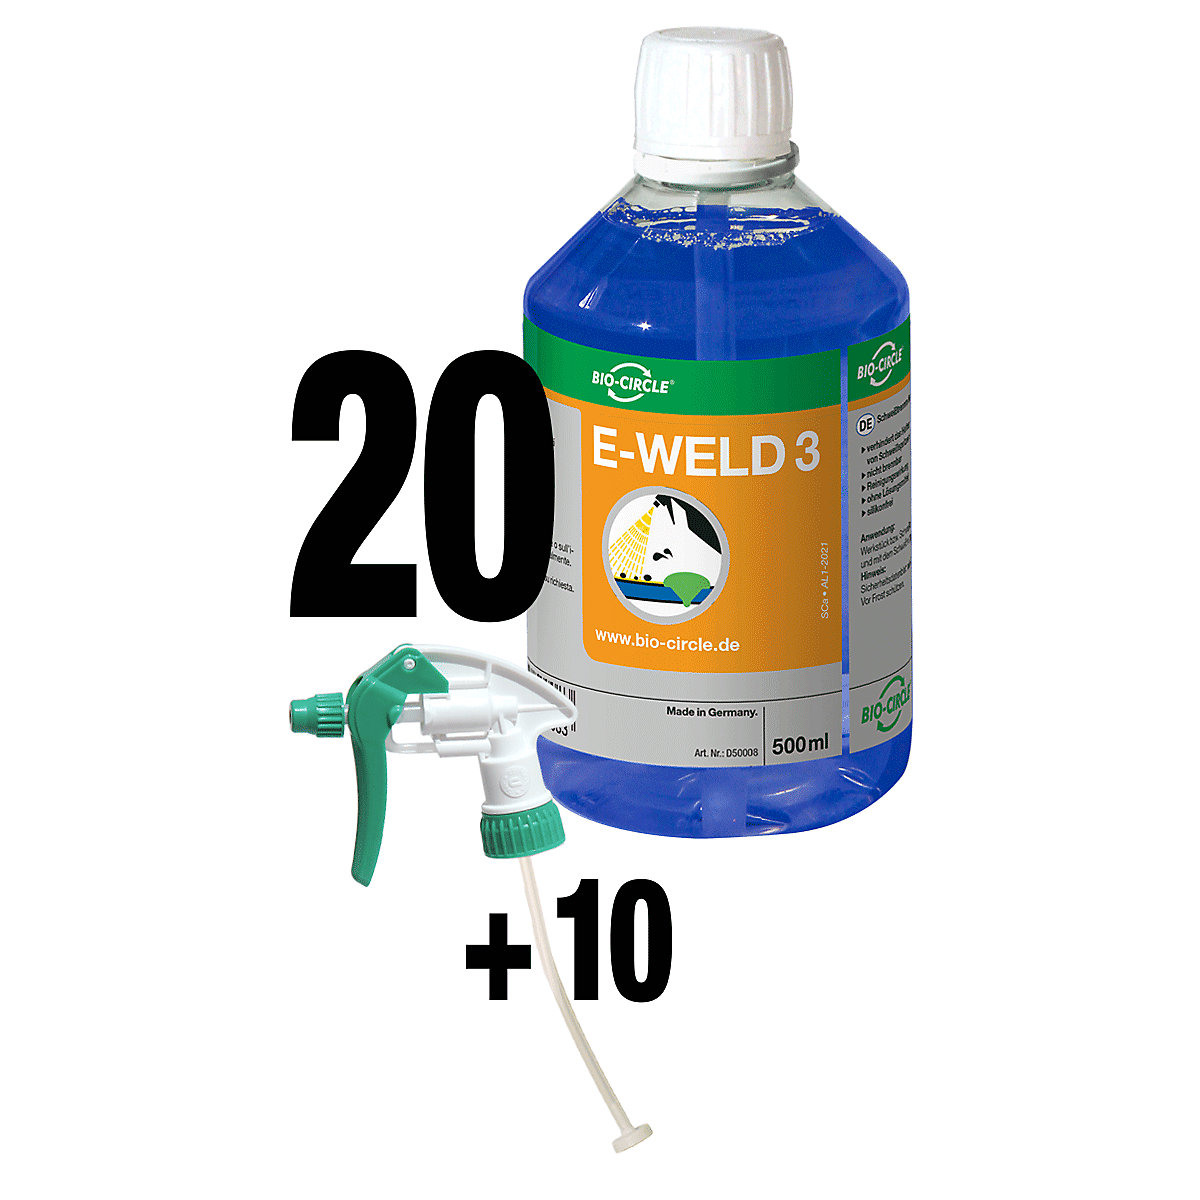 Spawalniczy spray ochronny E-WELD 3 – Bio-Circle